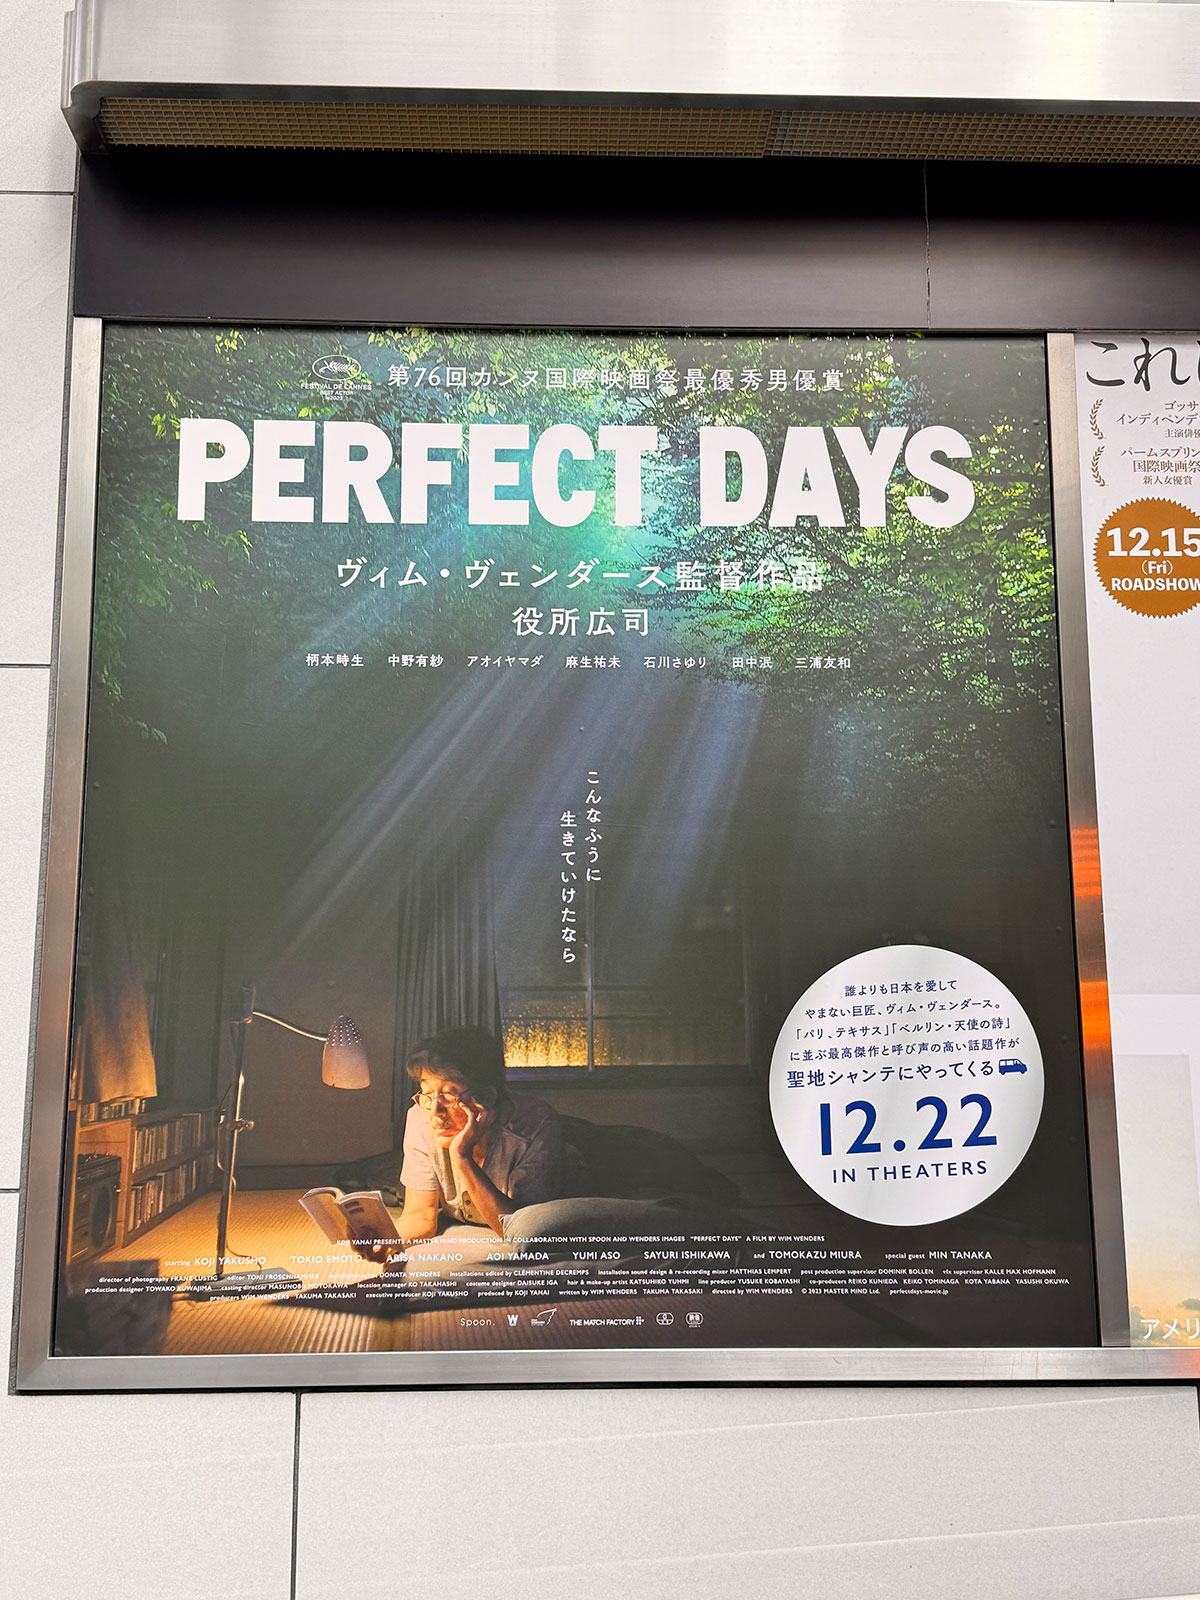 TOHOシネマズシャンテが入っているビル外壁にあしらわれた『PERFECT DAYS』キーヴィジュアル。